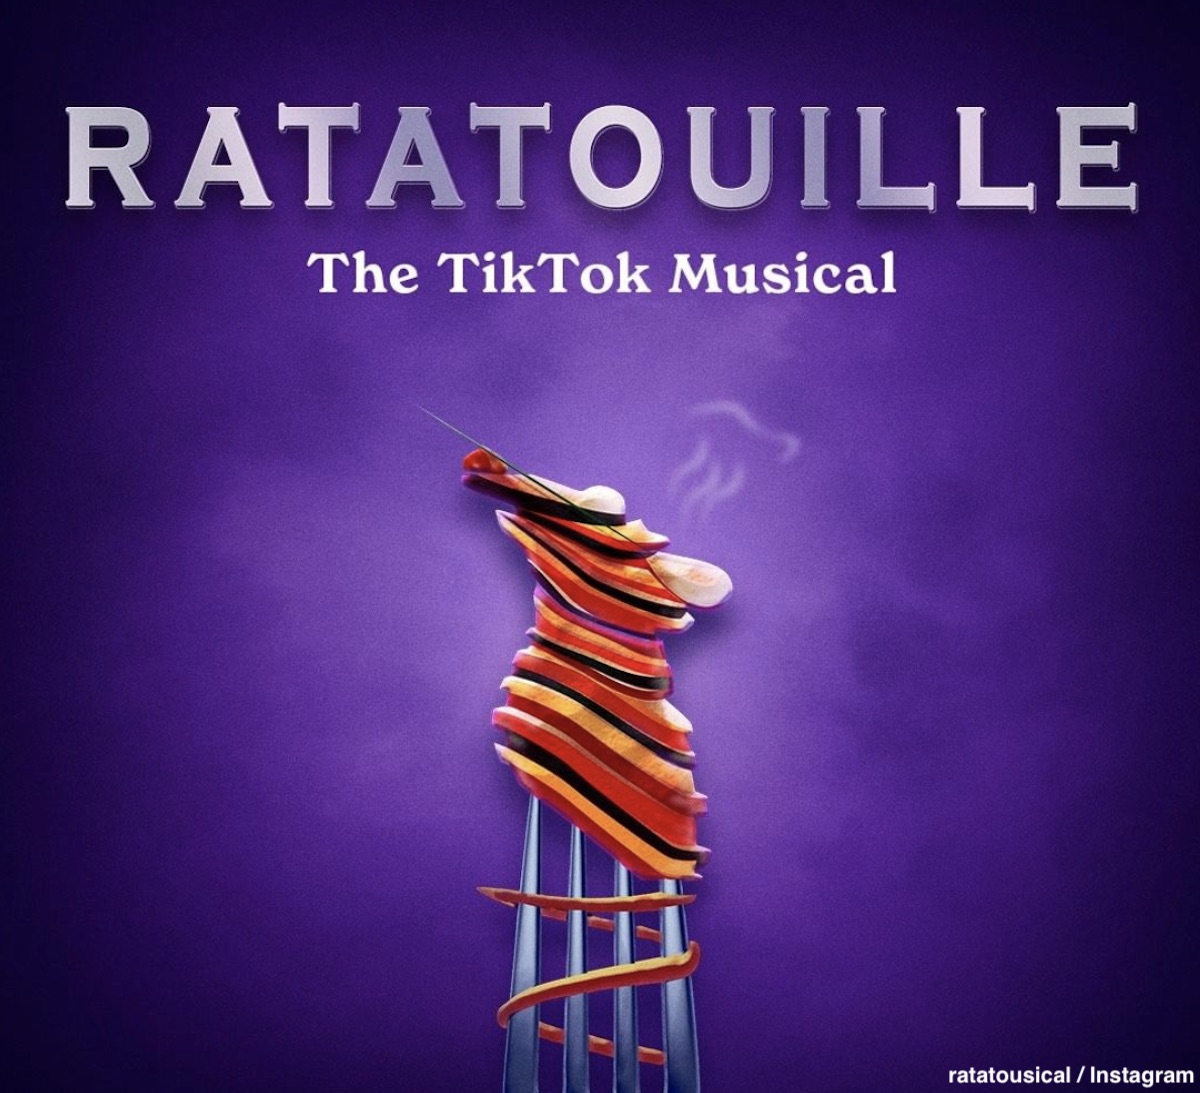 Ratatouille: The TikTok Musical